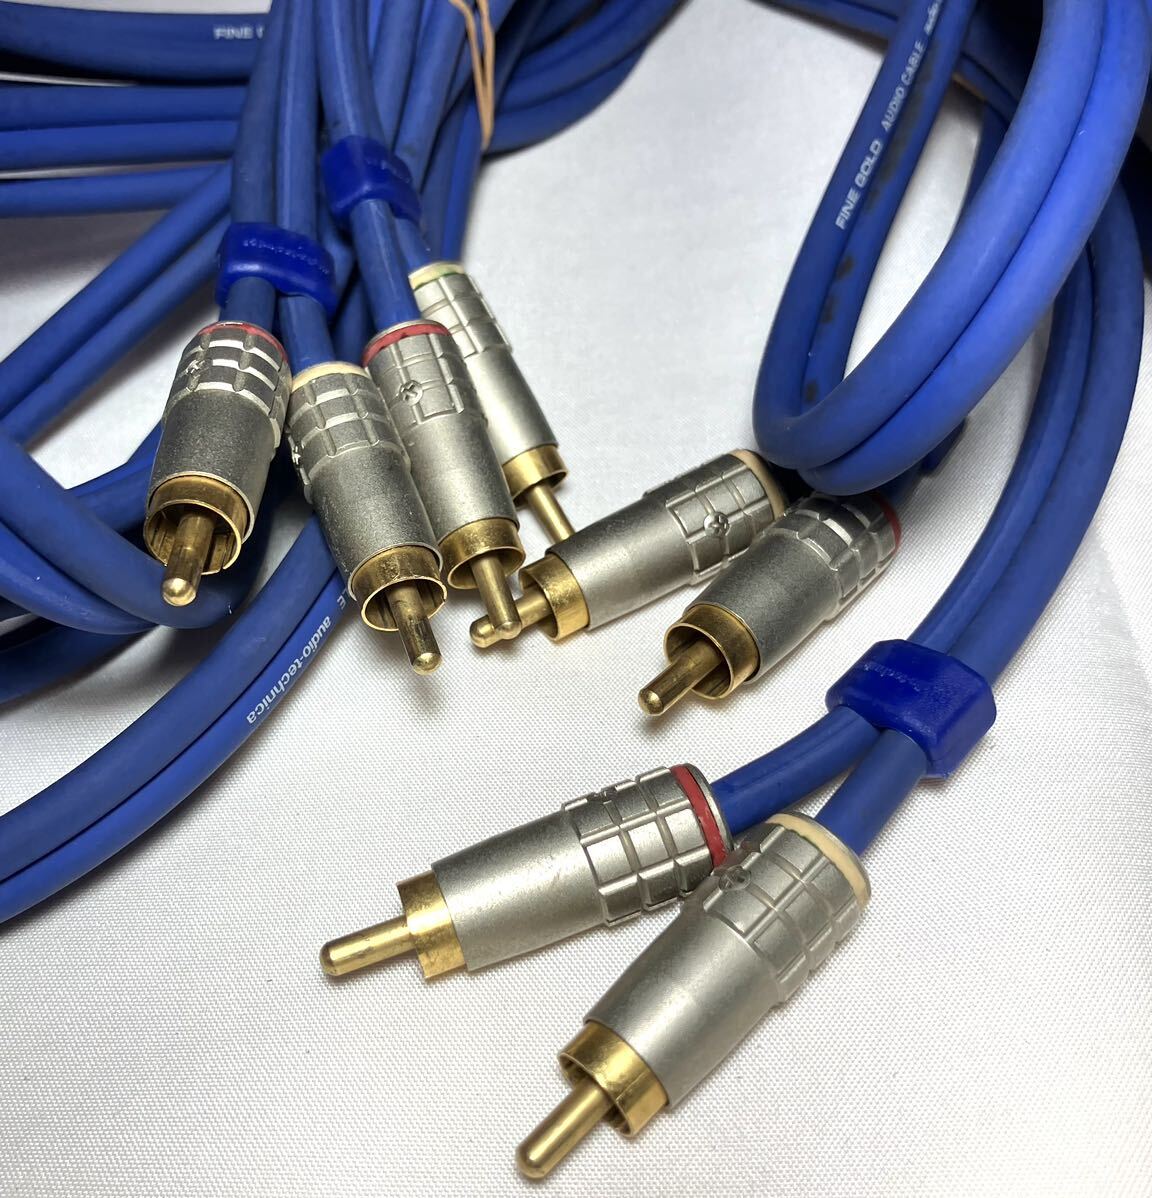 KGNY4030 audio-technica FINE GOLD Audio Technica RCA кабель пара спикер-кабель аудио кабель 2 шт. комплект текущее состояние товар 